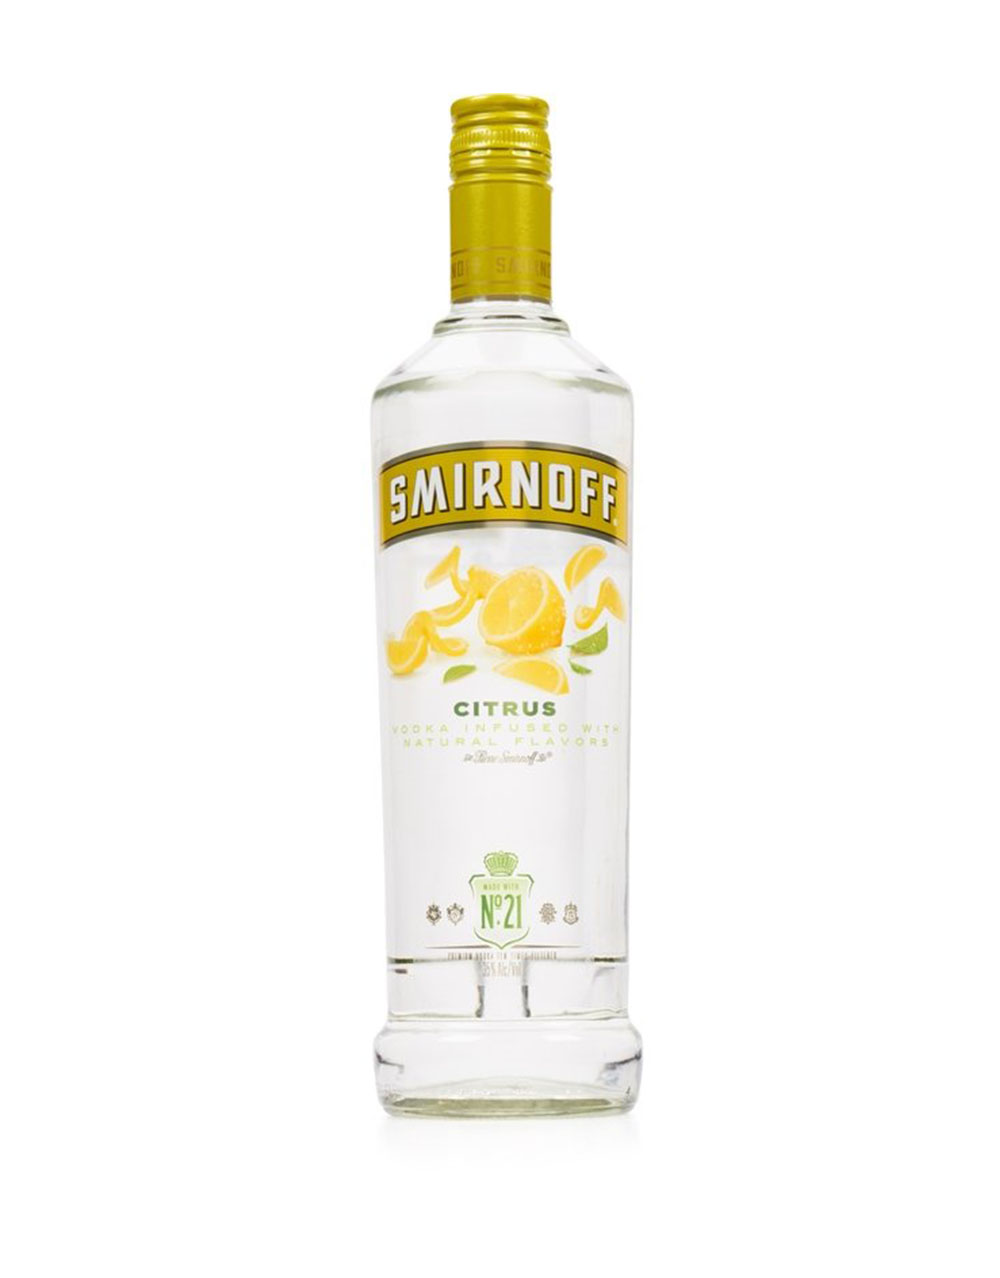 Smirnoff Citrus Vodka 6 Packs of 50 ml